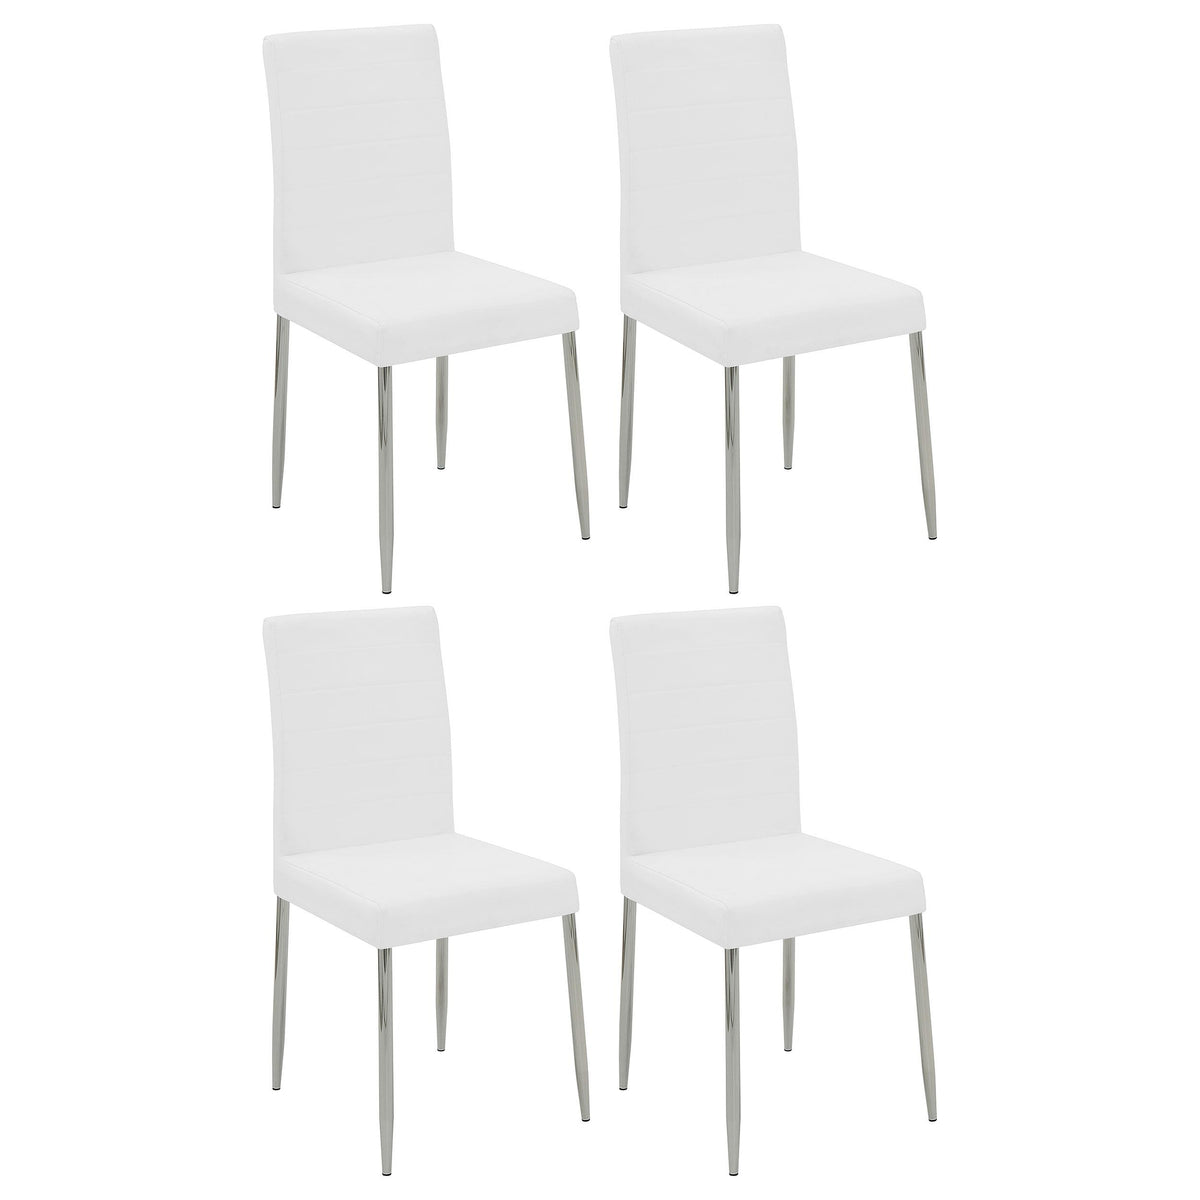 Maston Upholstered Dining Chairs White (Set of 4)  Las Vegas Furniture Stores